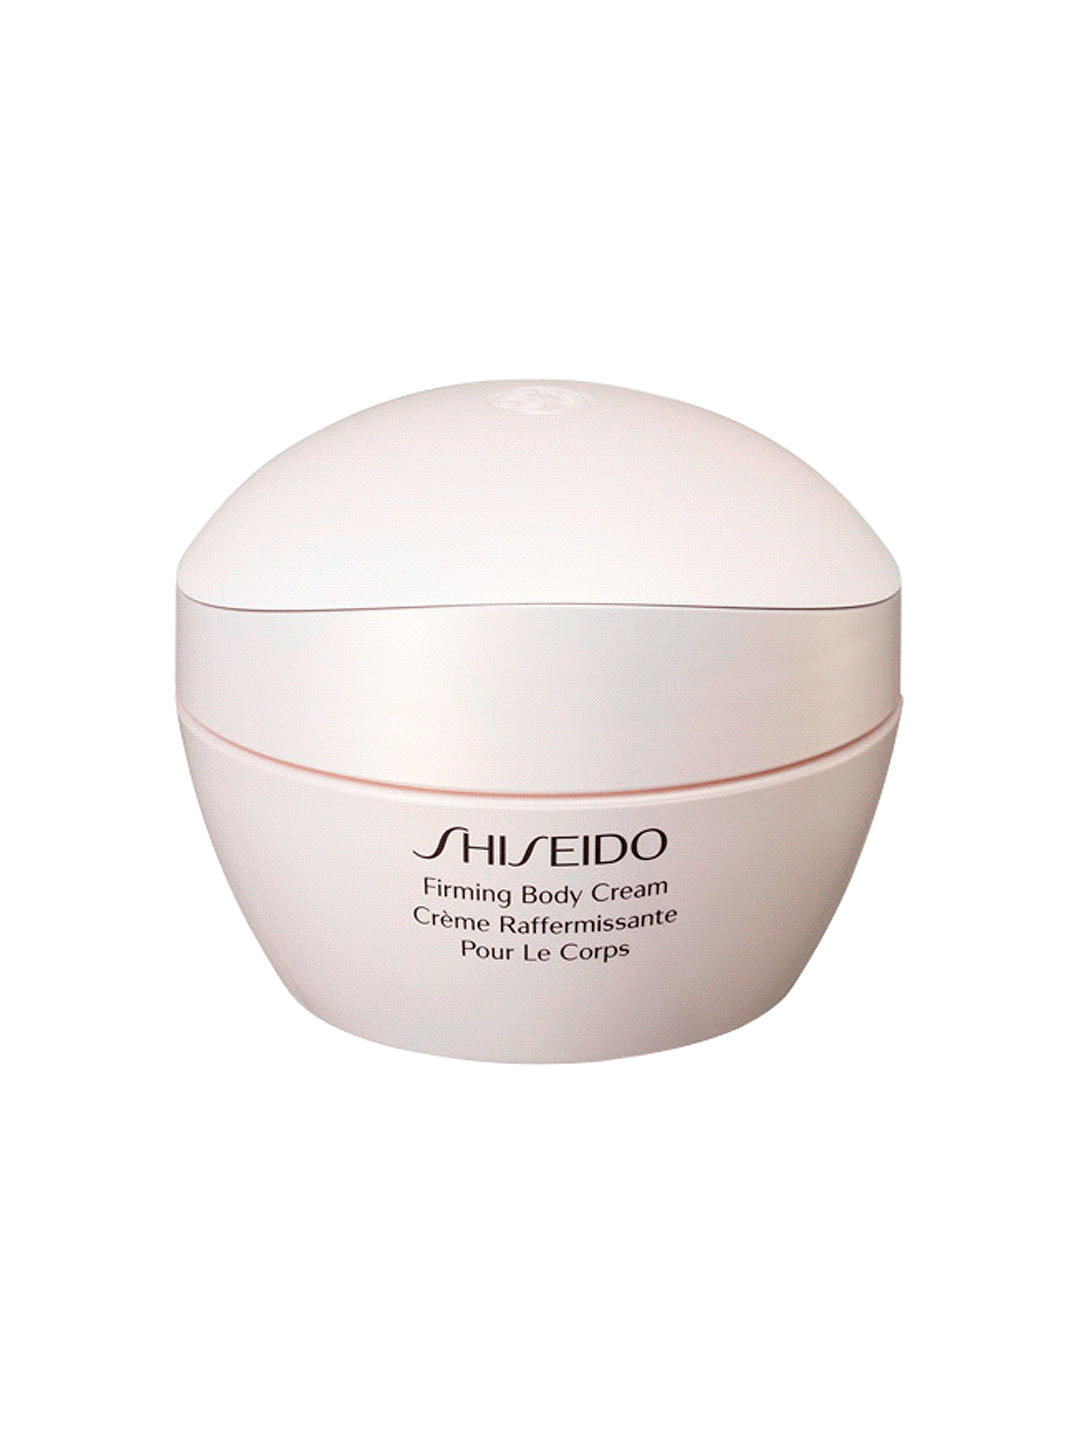 Shiseido Firming Body Cream, 200ml 1